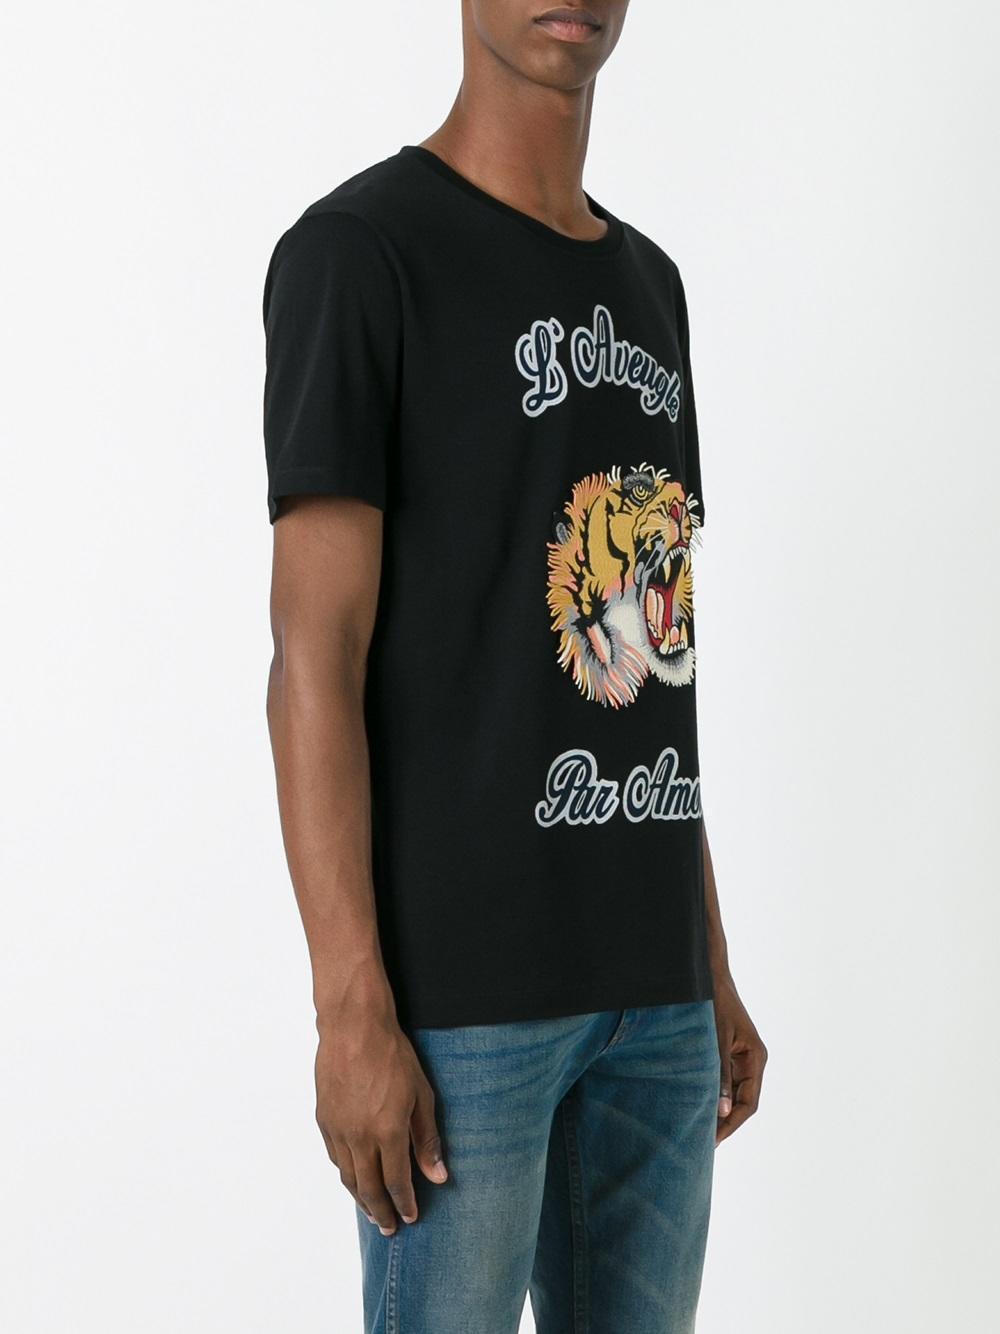 Gucci Cotton Tiger Appliqué T-shirt in Black for Men - Lyst